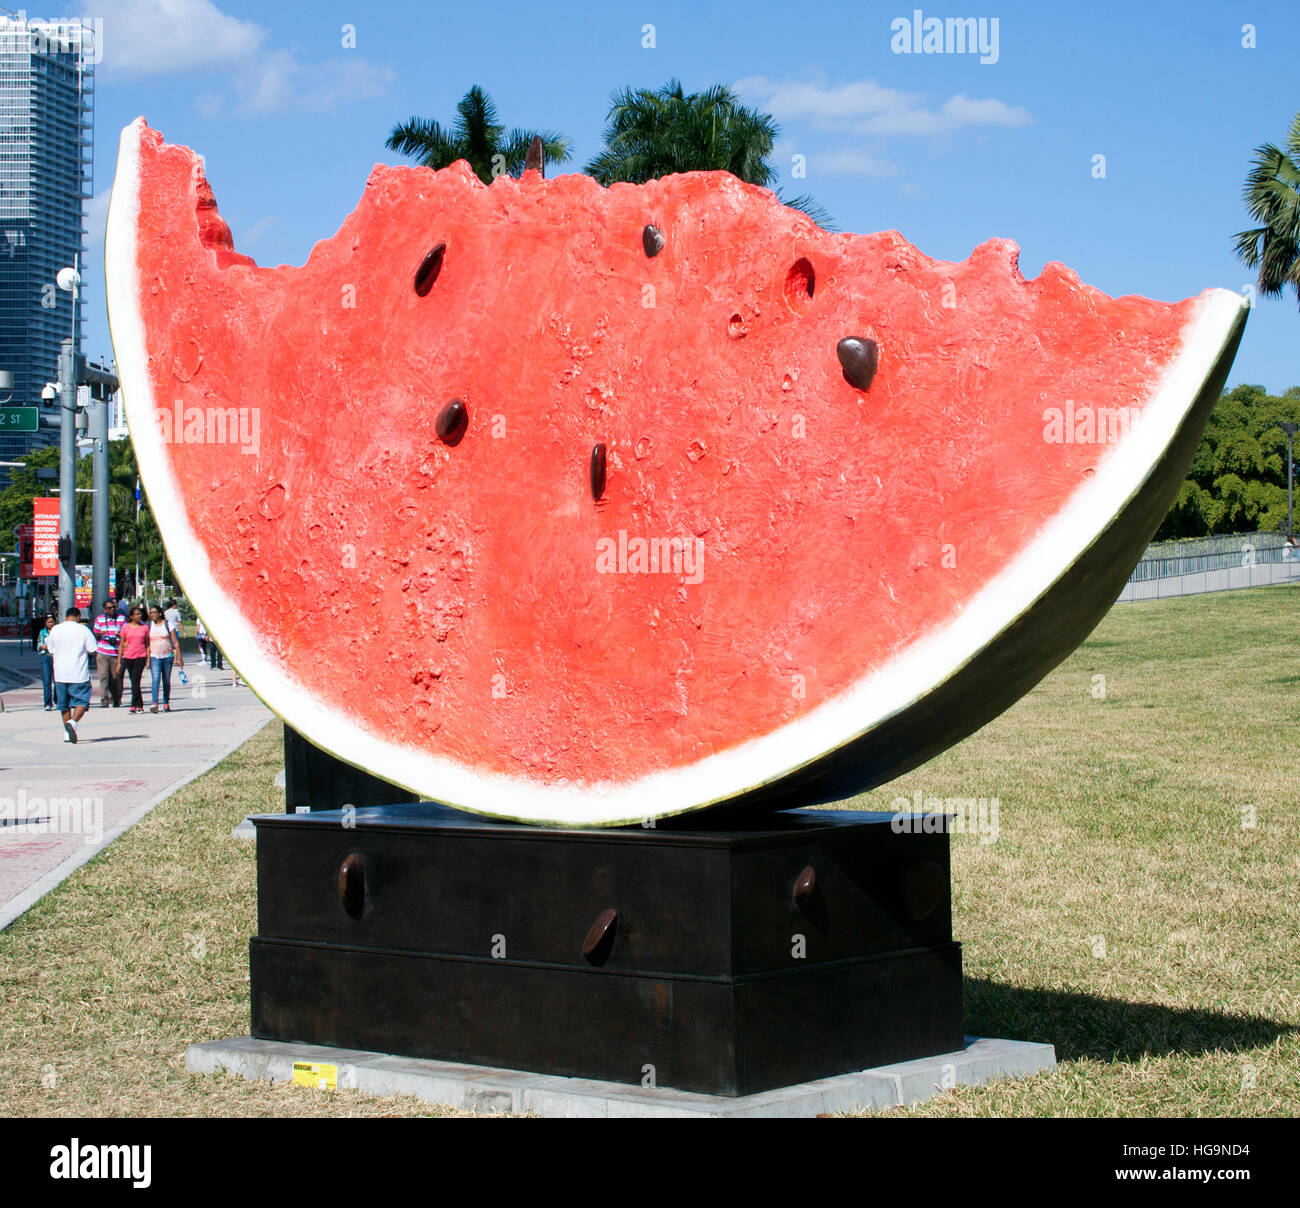 Riesige Wassermelone Slice Skulptur in Miami, Florida Stockfoto